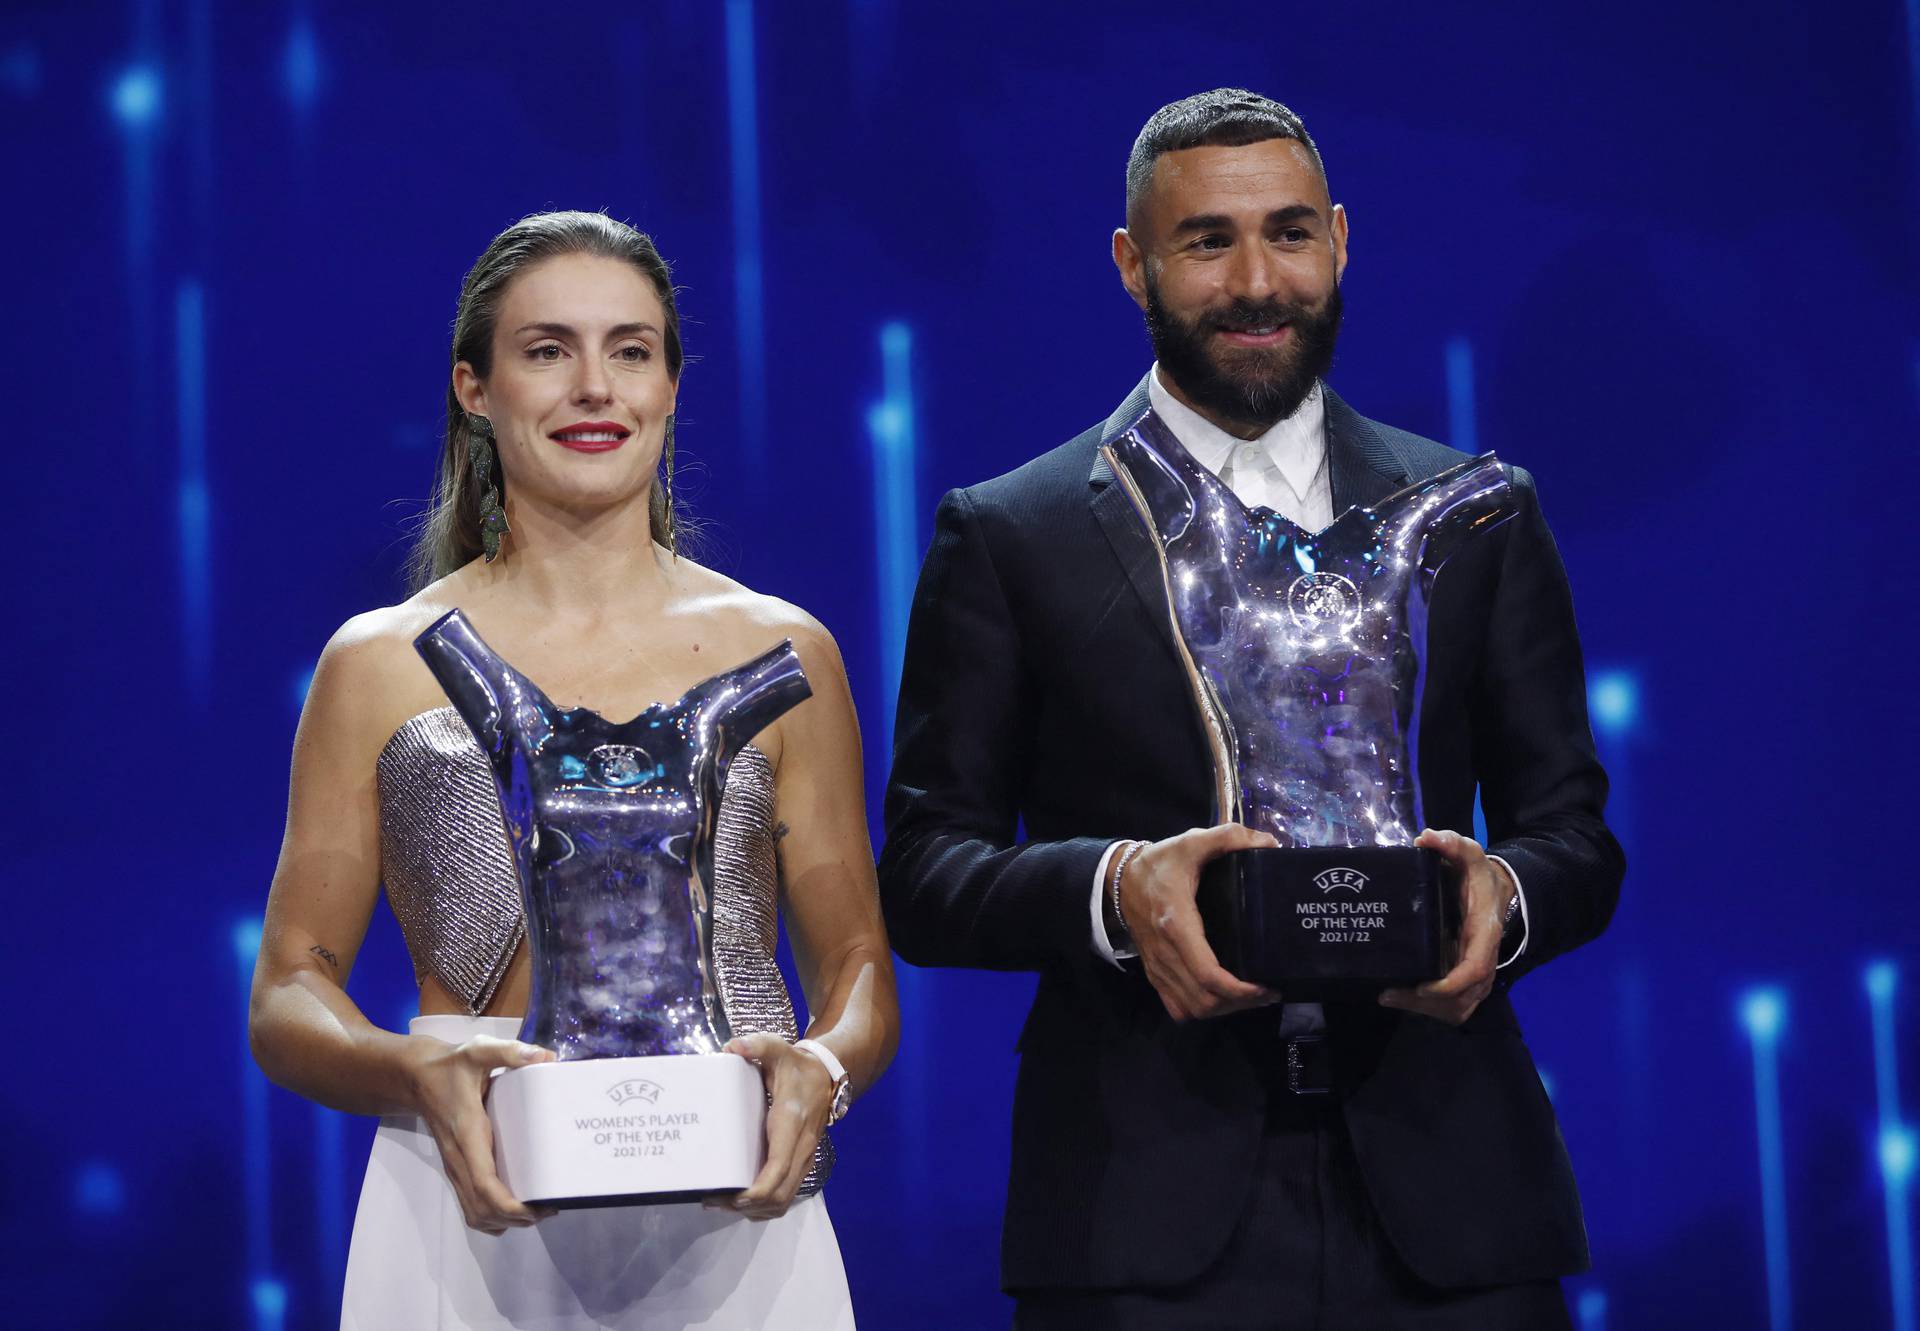 2021/22 UEFA Player of the Year Award